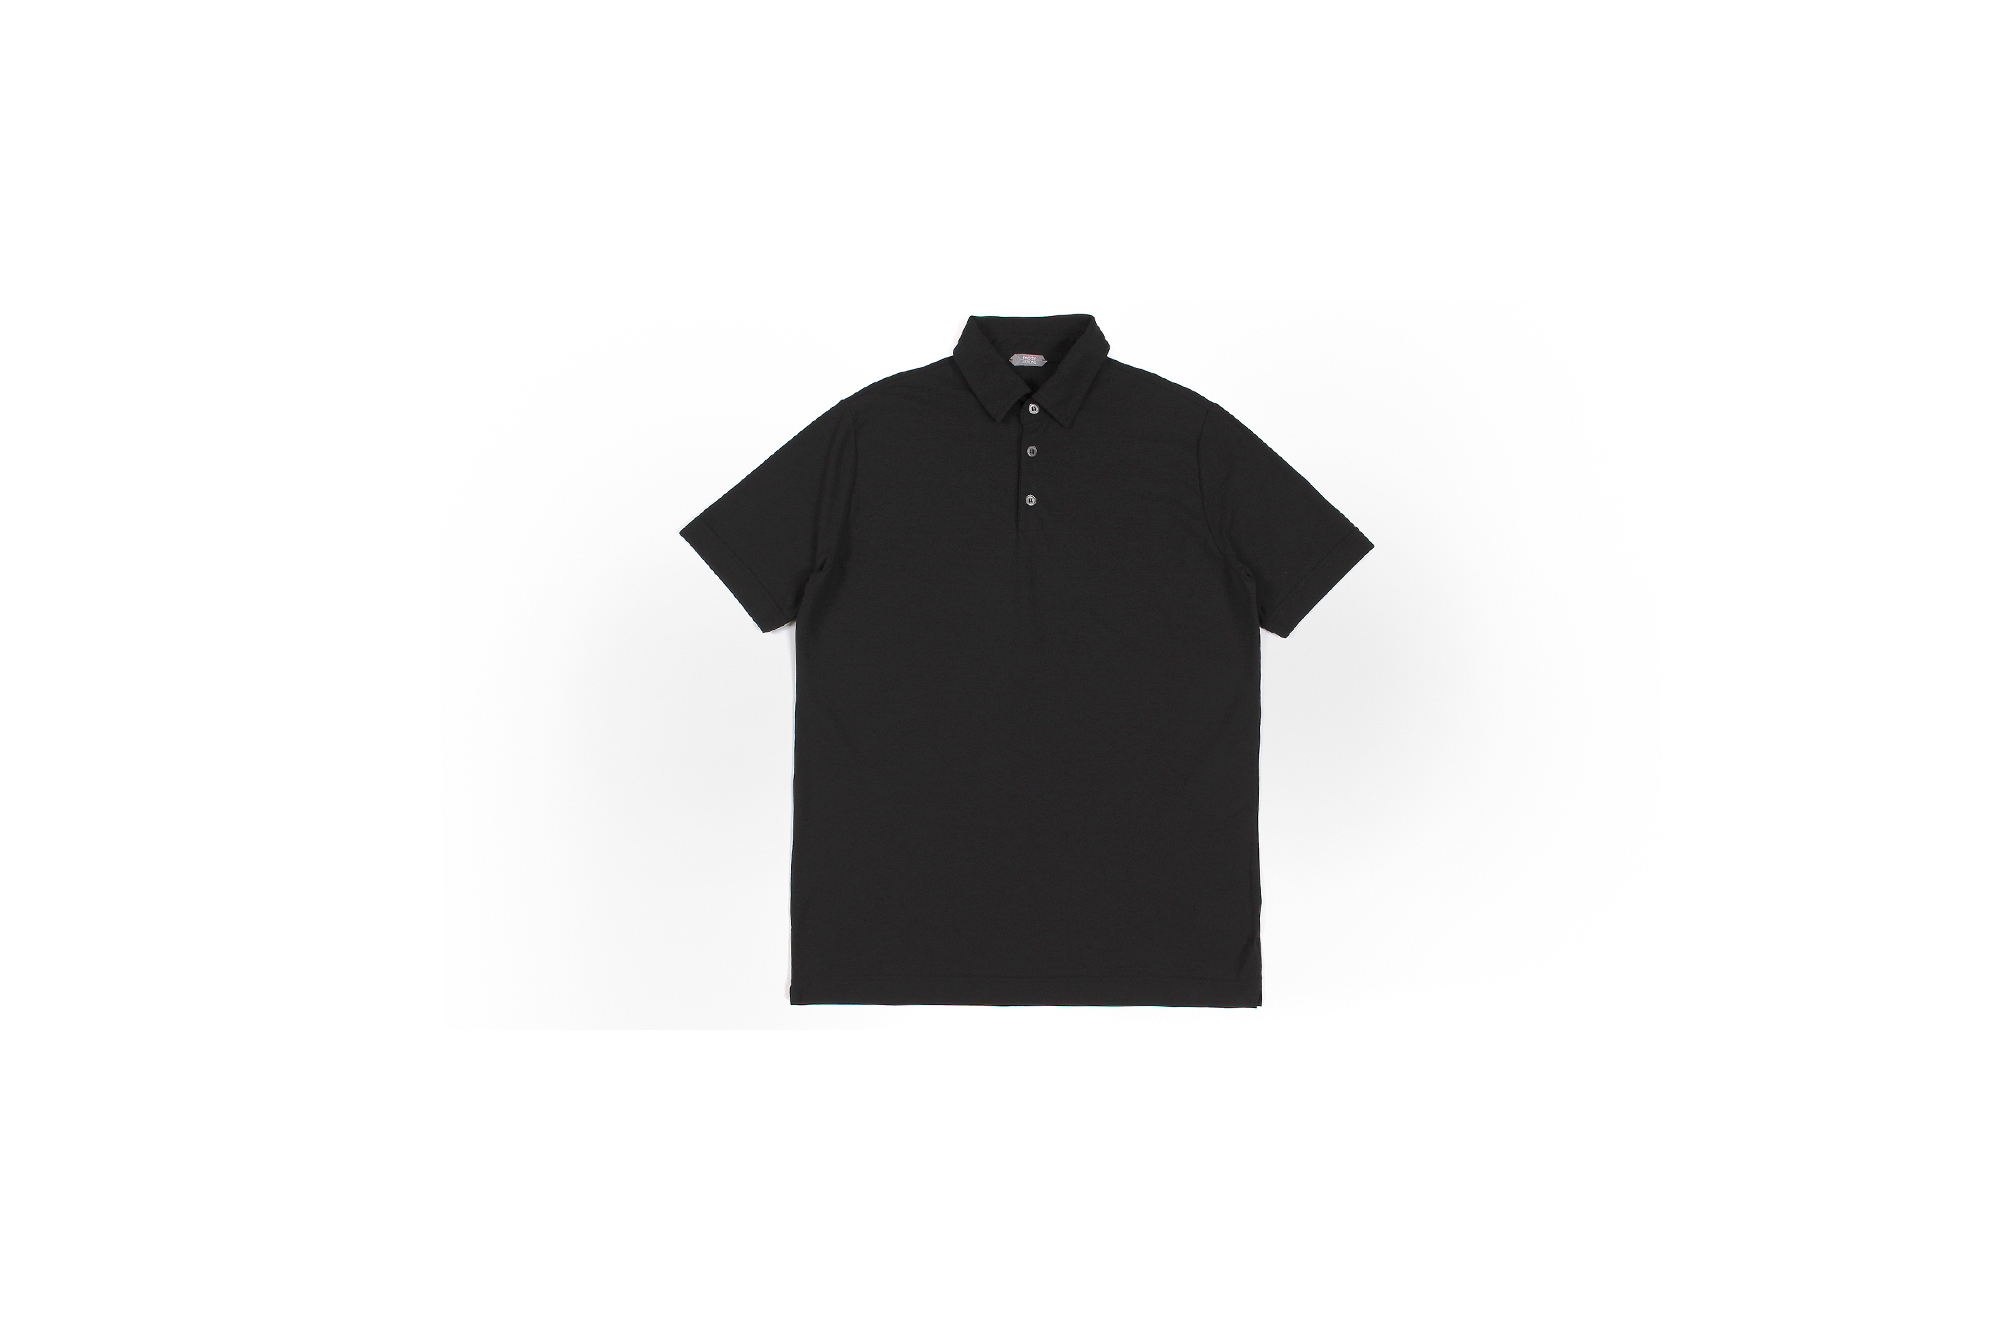 ZANONE(ザノーネ) Polo Shirt ice cotton アイスコットン ポロシャツ BLACK (ブラック・Z0015) made in italy (イタリア製) 2022 春夏新作 【入荷しました】【フリー分発売開始】愛知 名古屋 ALto e Diritto altoediritto アルトエデリット